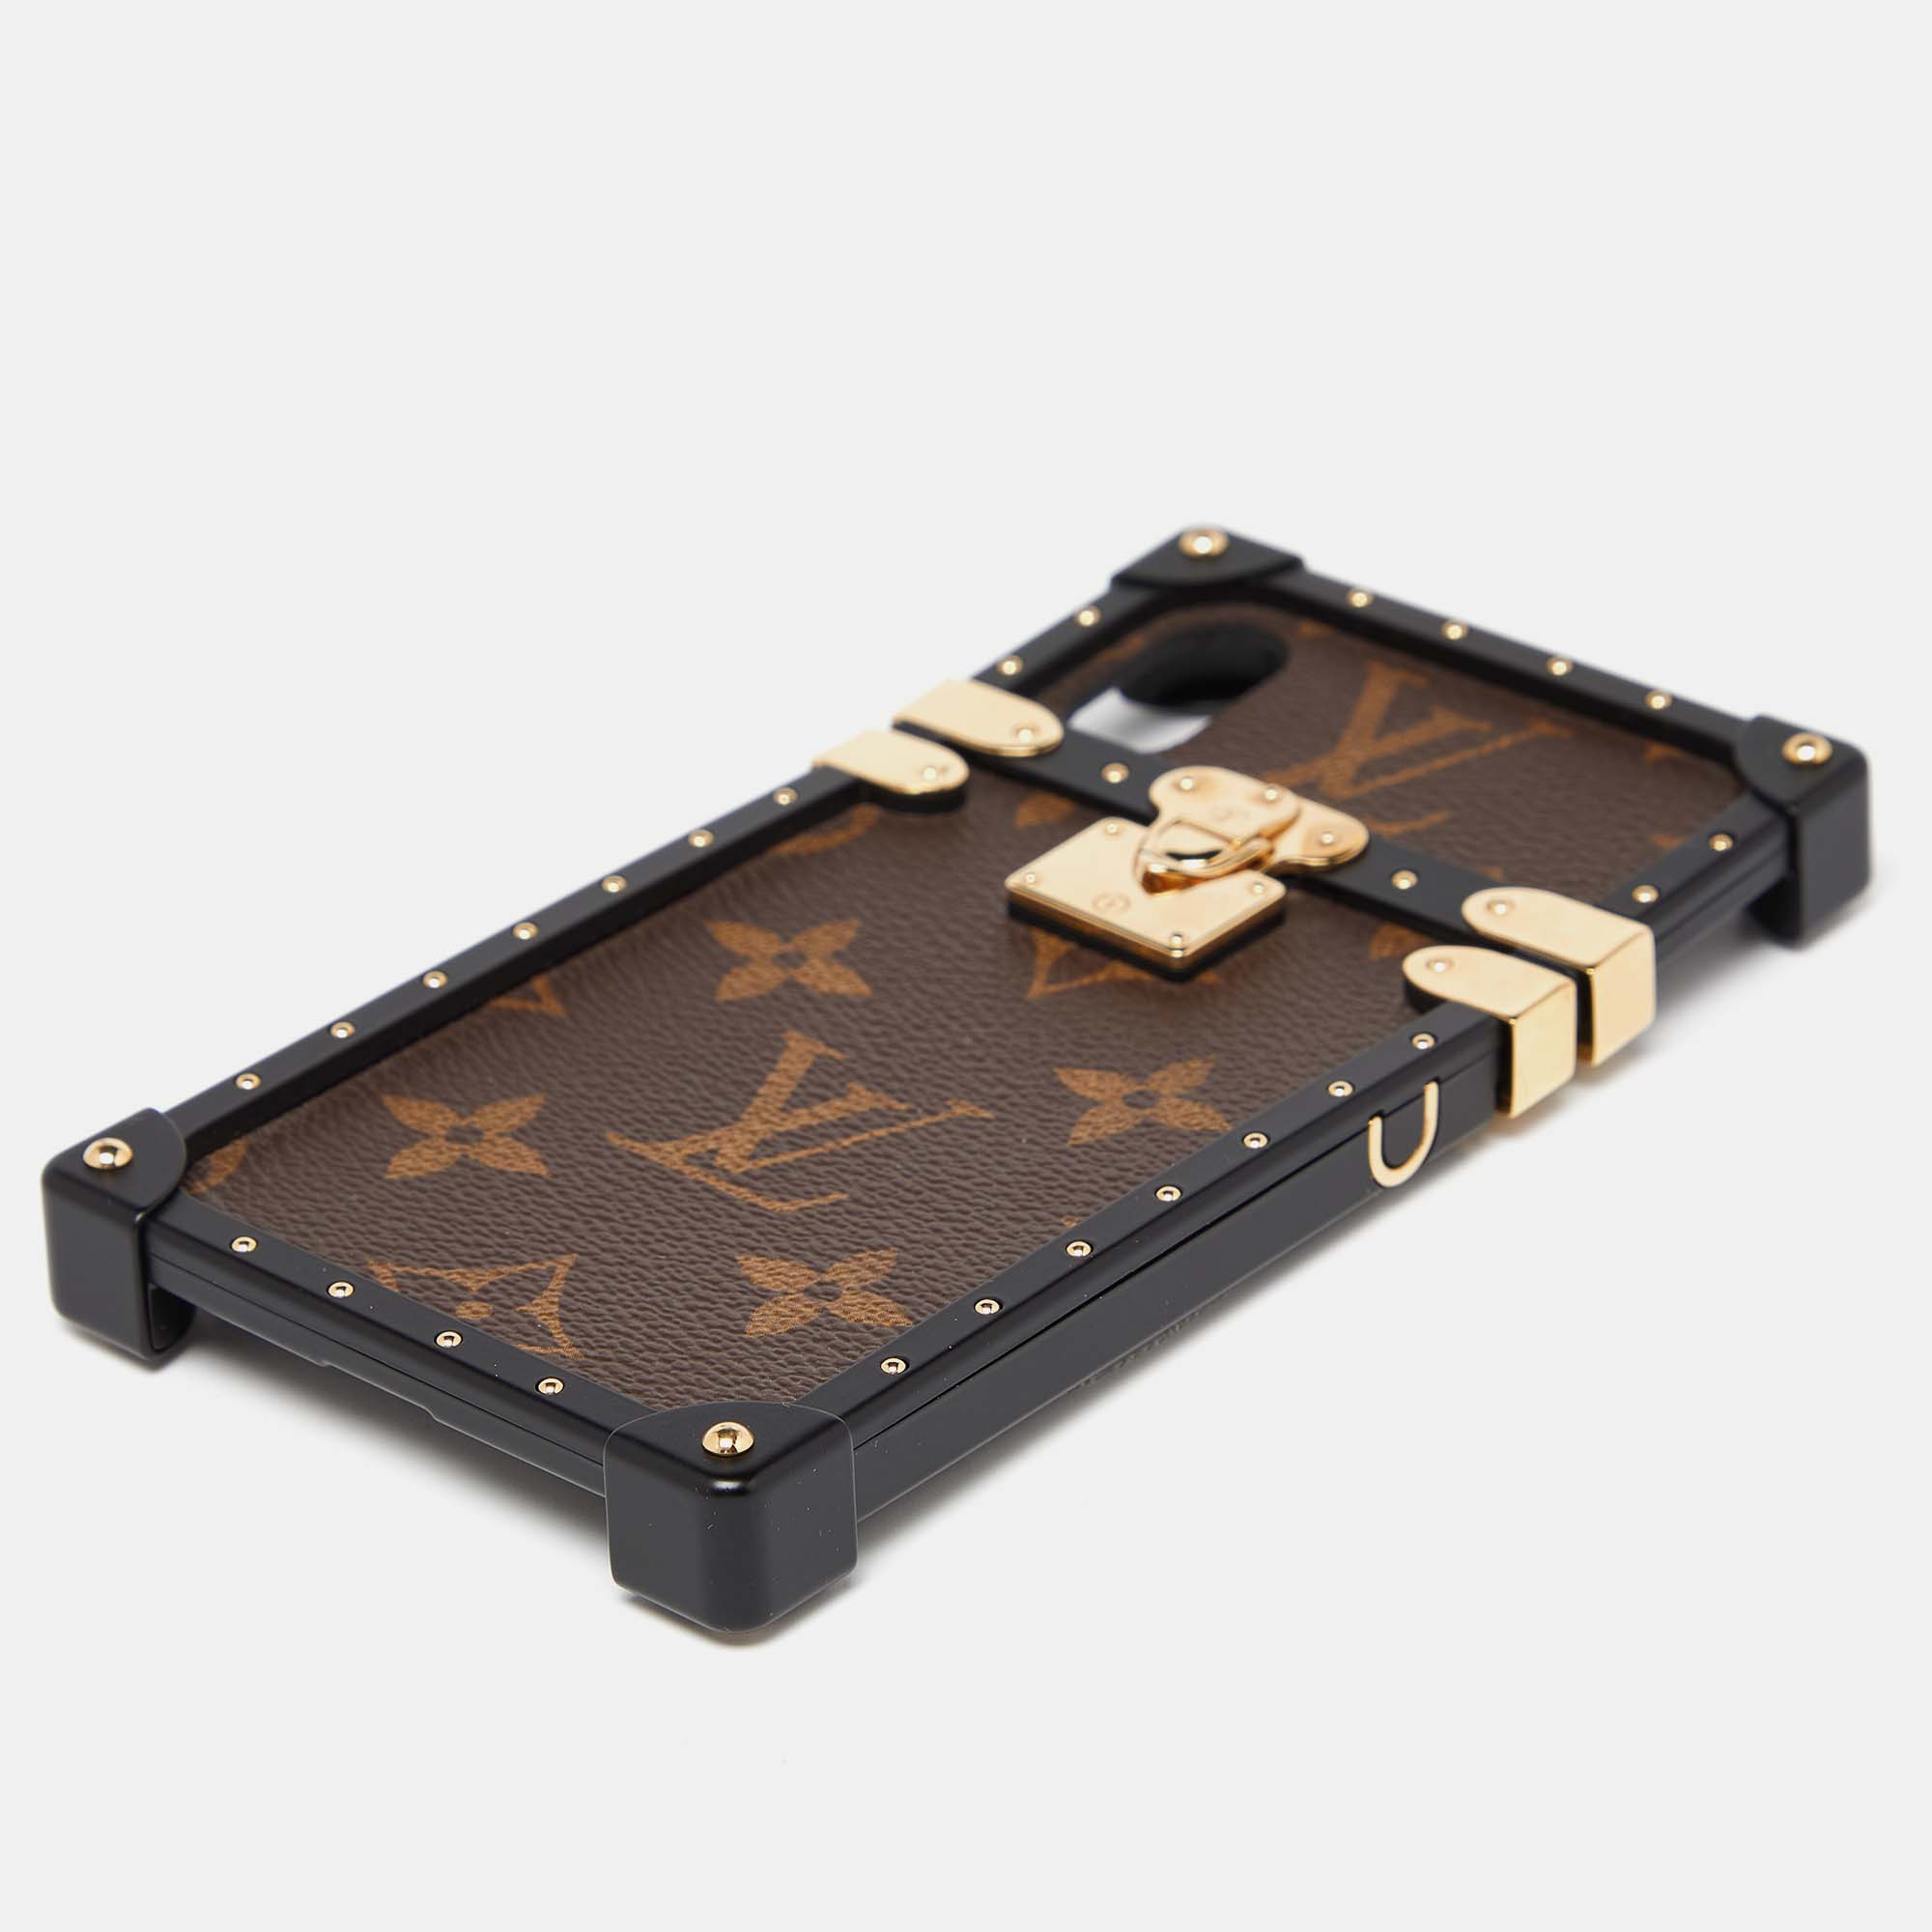 Louis Vuitton Monogram Canvas Eye Trunk IPhone X Case